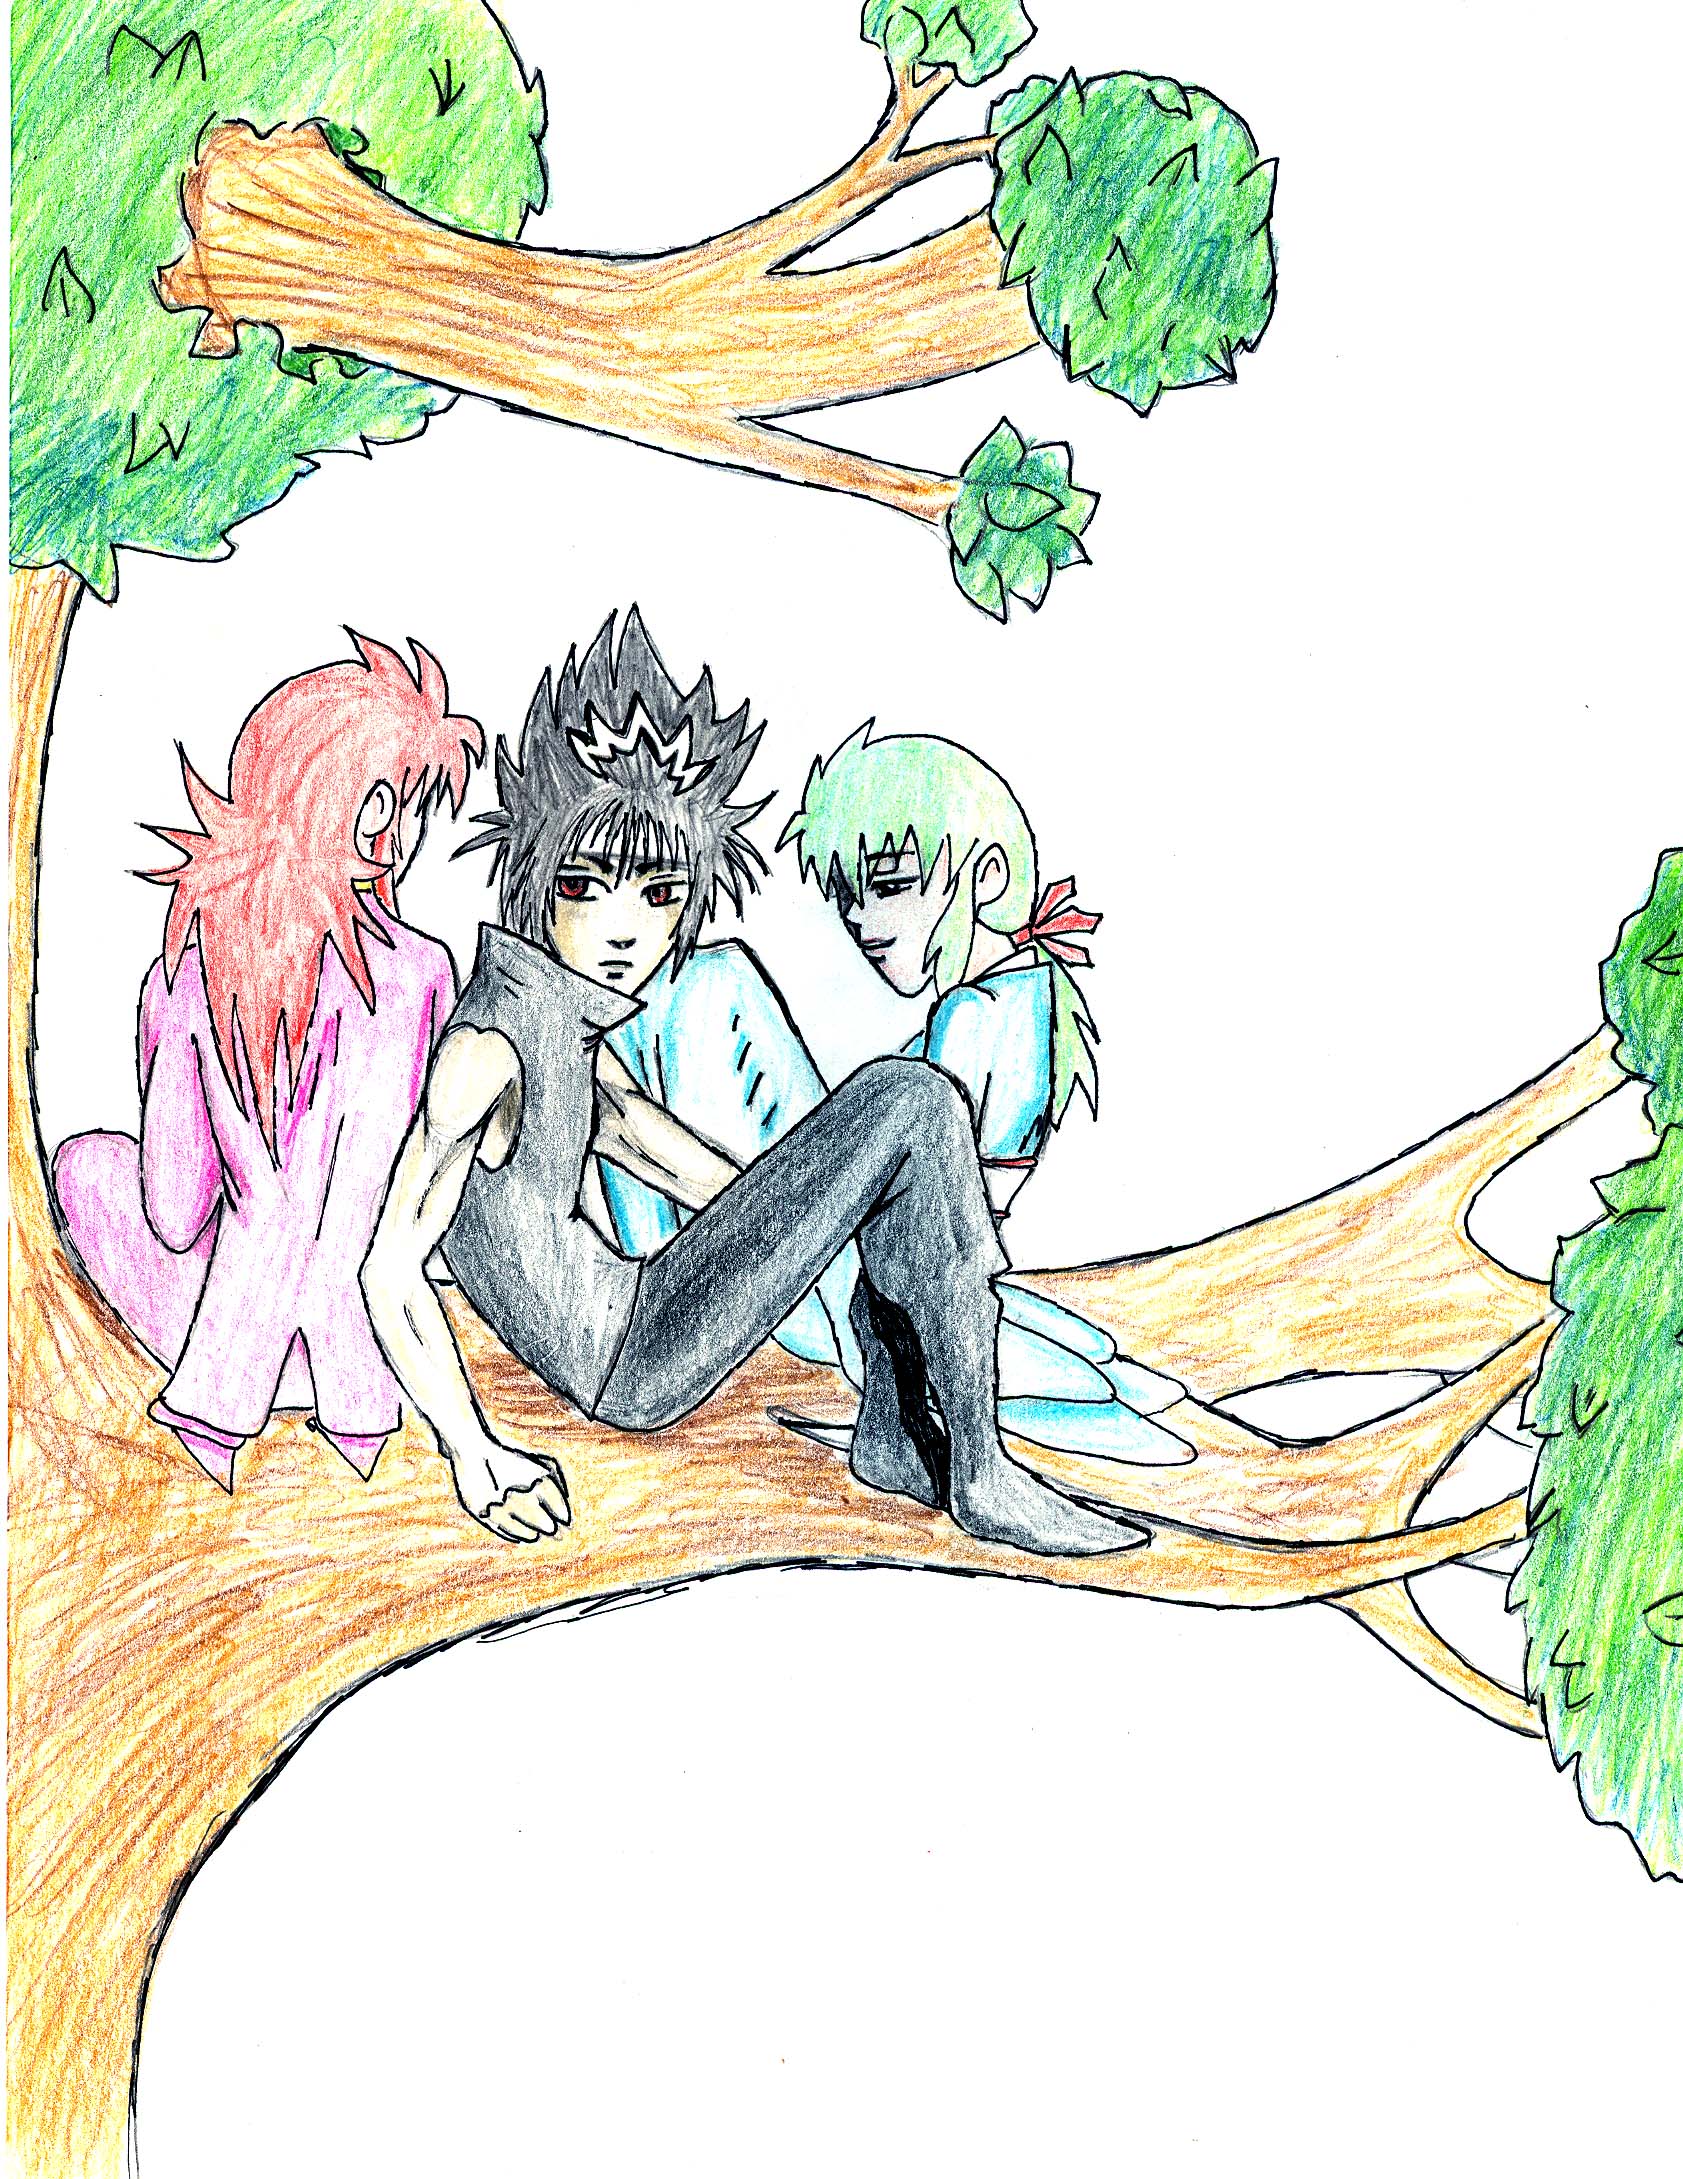 Hiei and Kurama Sitting in a Tree... With Yukina? by randomosity